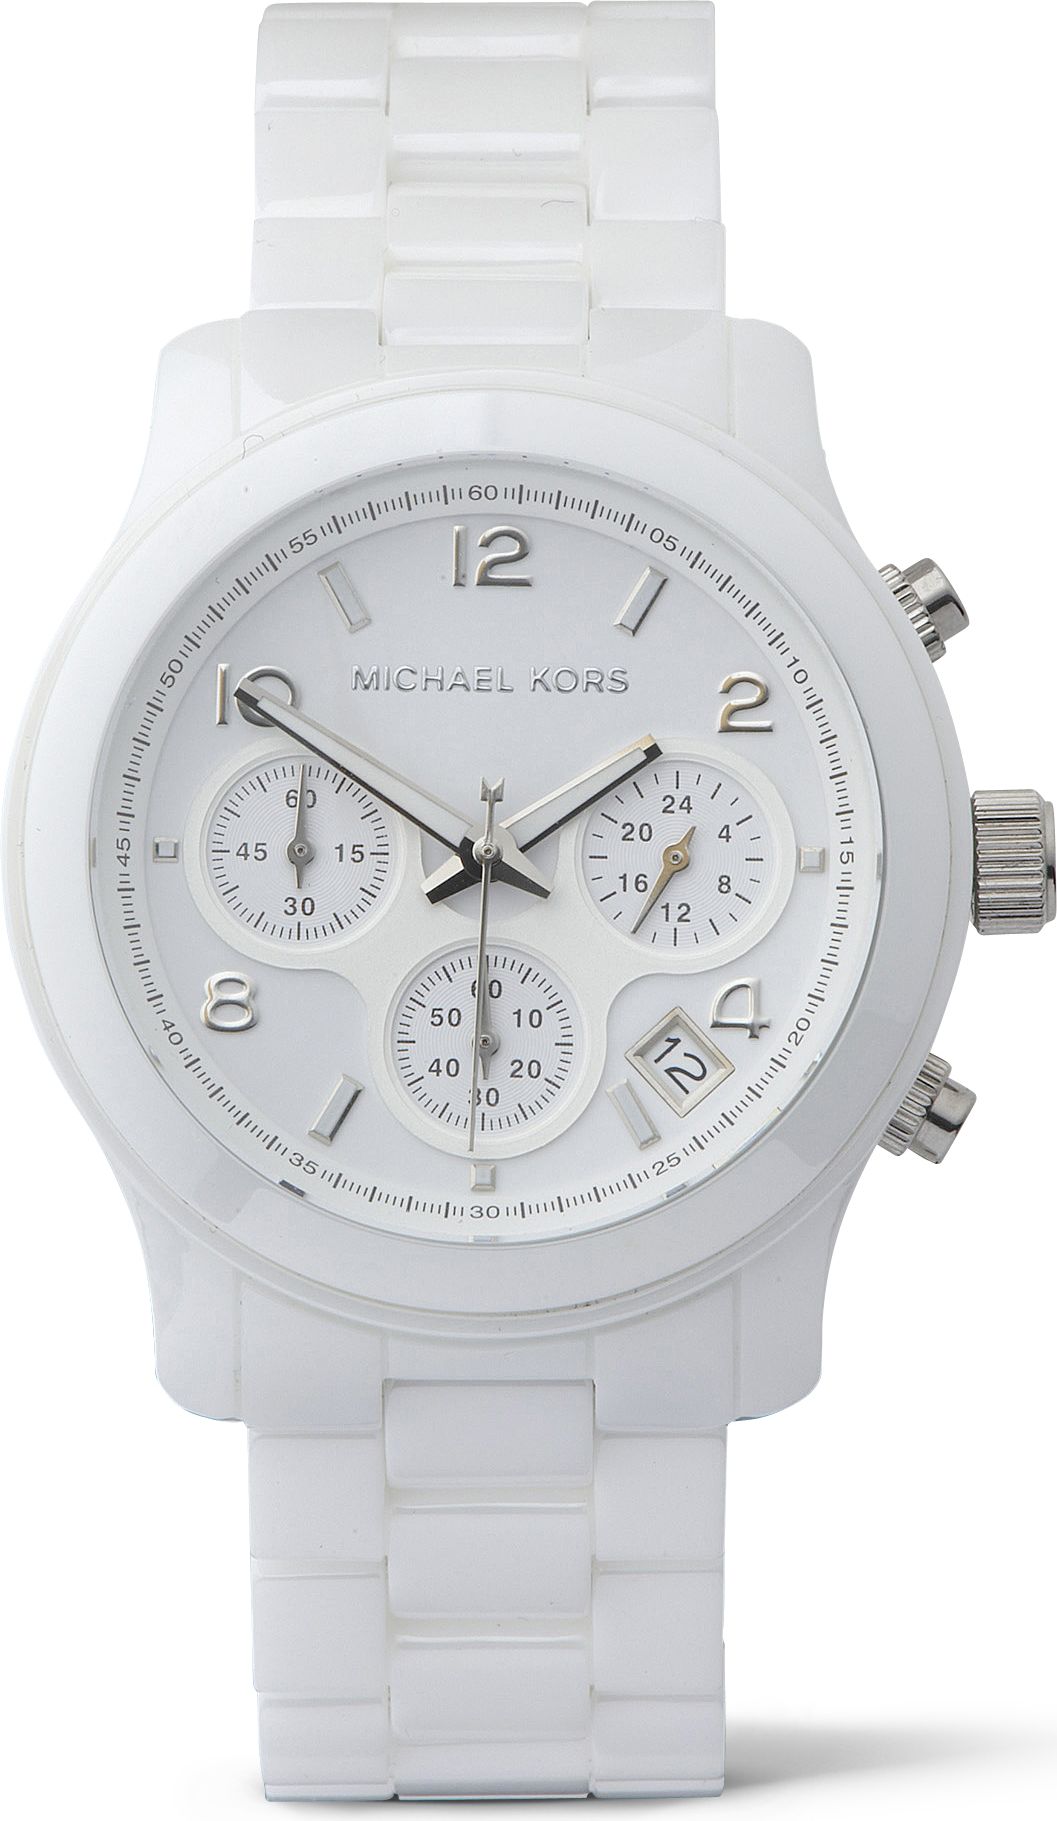 Michael Kors White Ceramic Chronograph Watch Product 1 5575387 492248069 